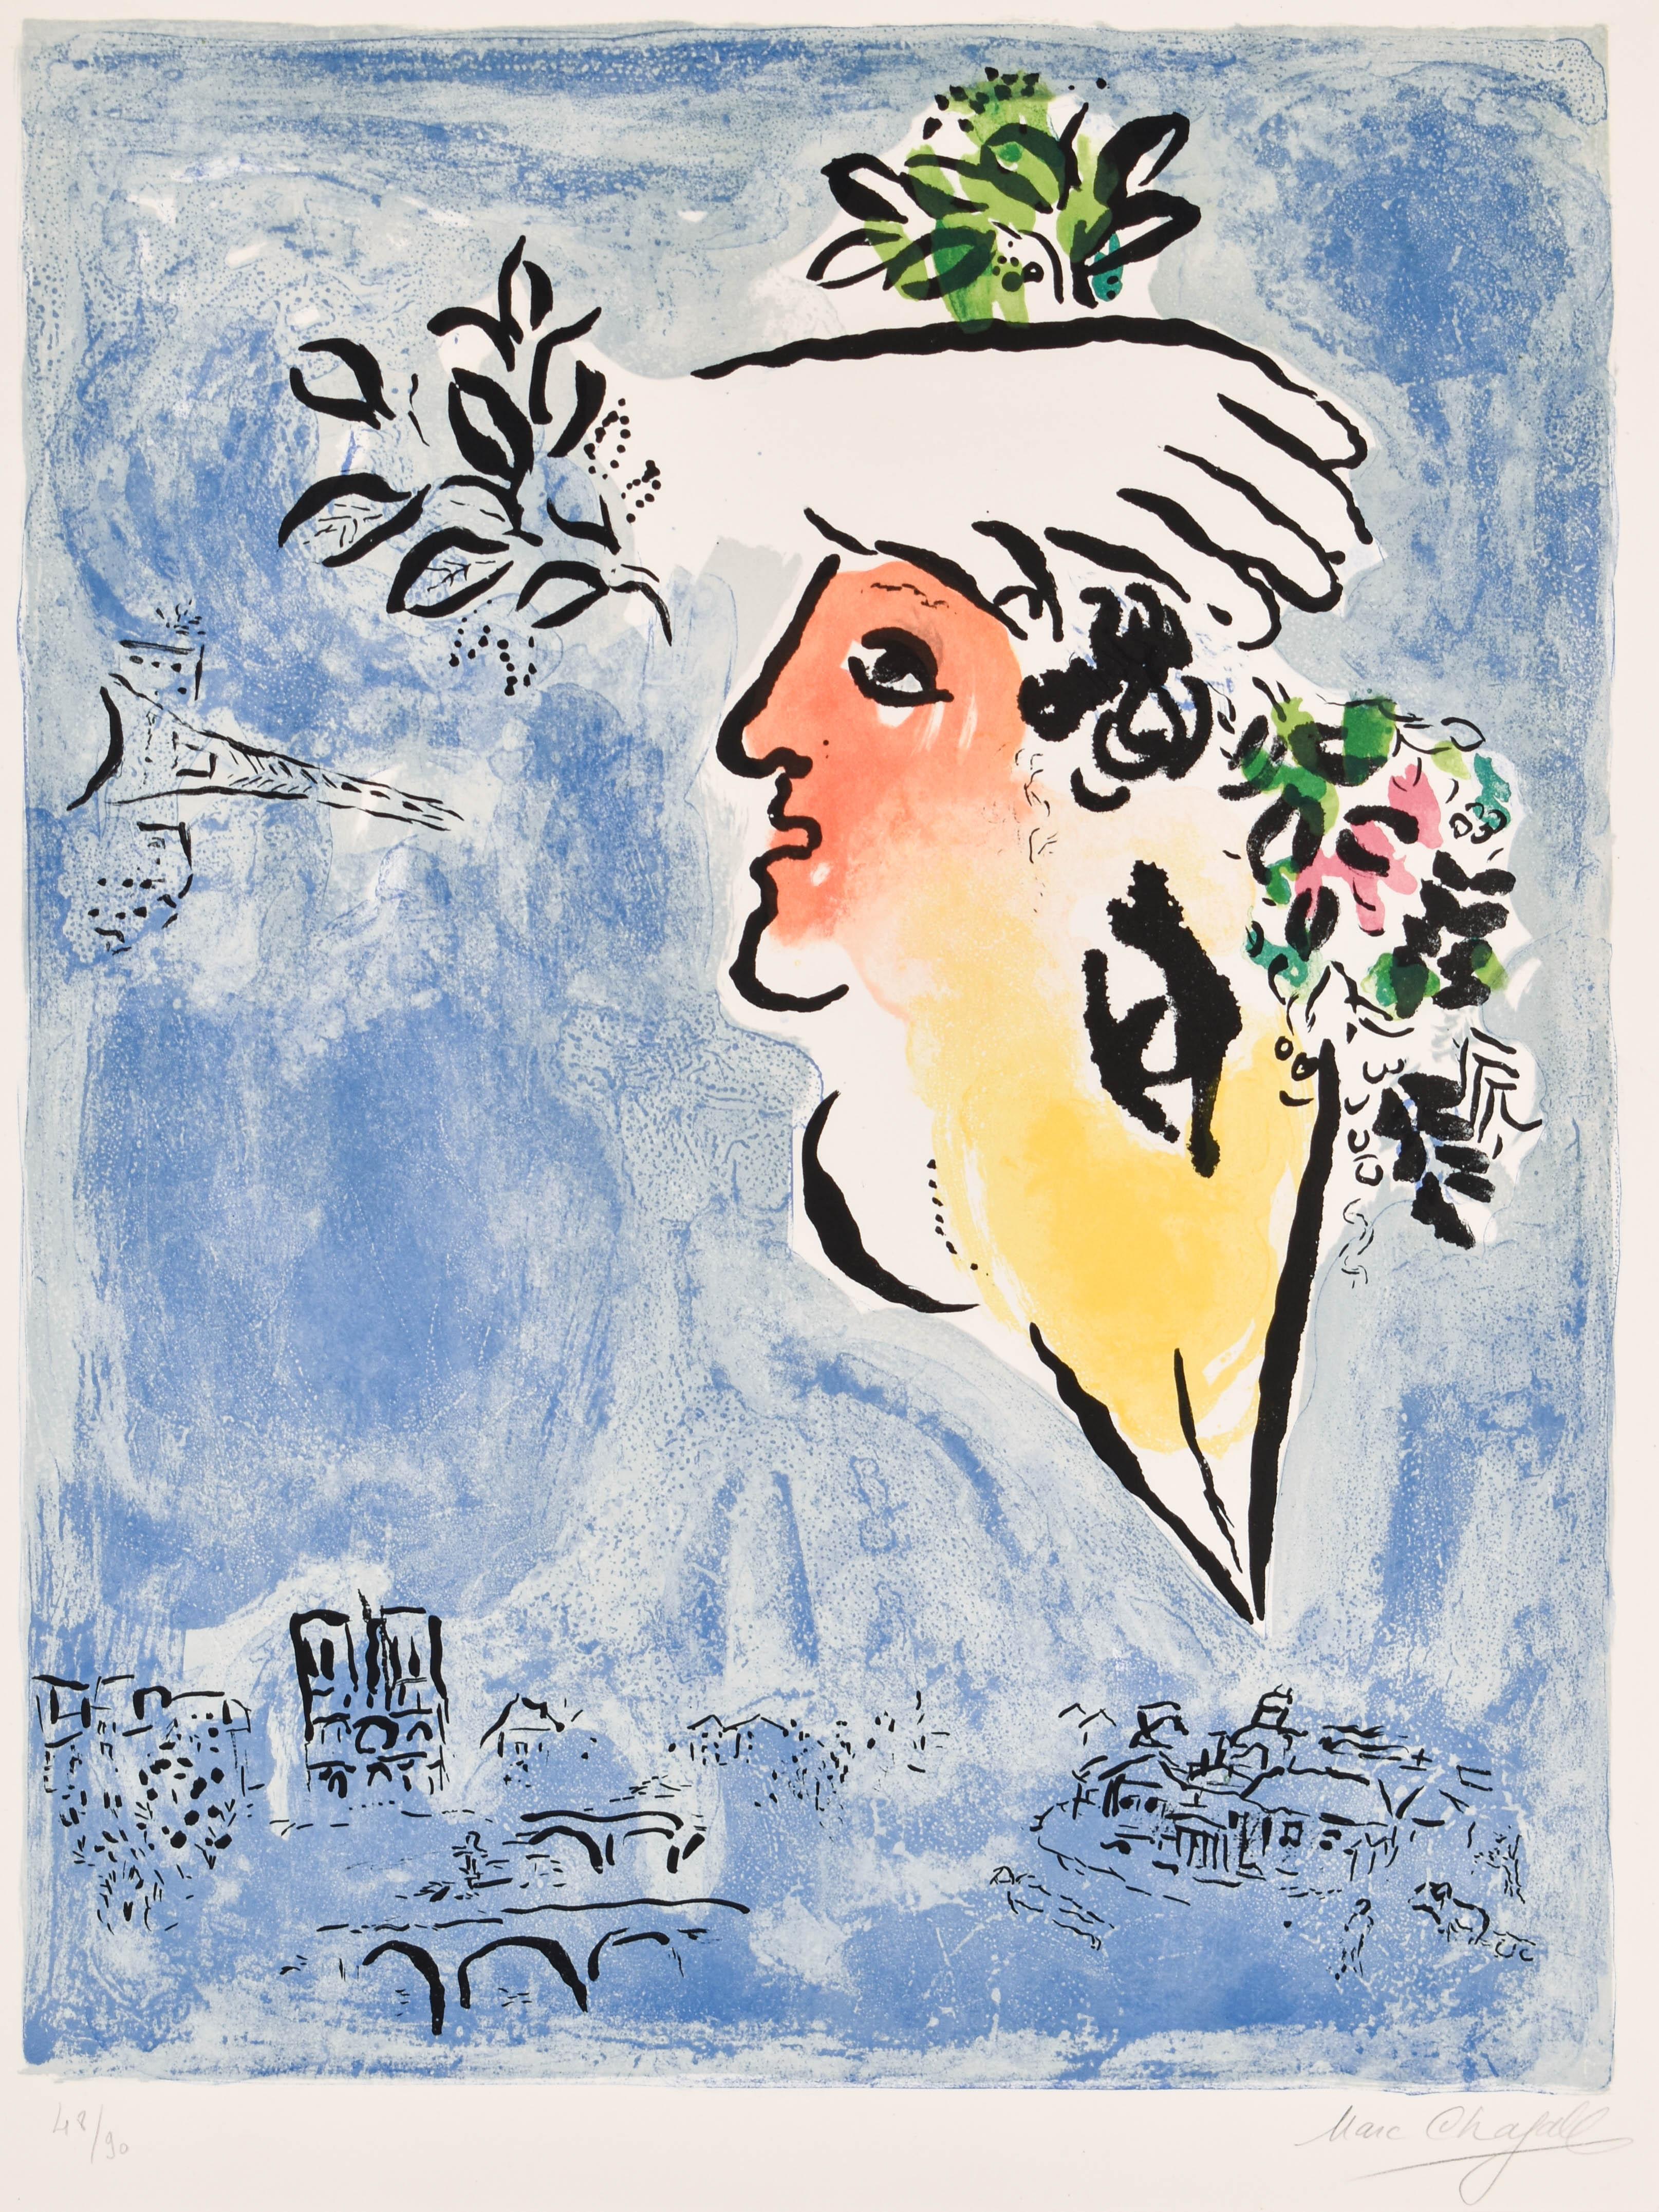 Marc Chagall Abstract Print - Le ciel blue, Paris - The blue sky of Paris - Lithograph - Hand signed 